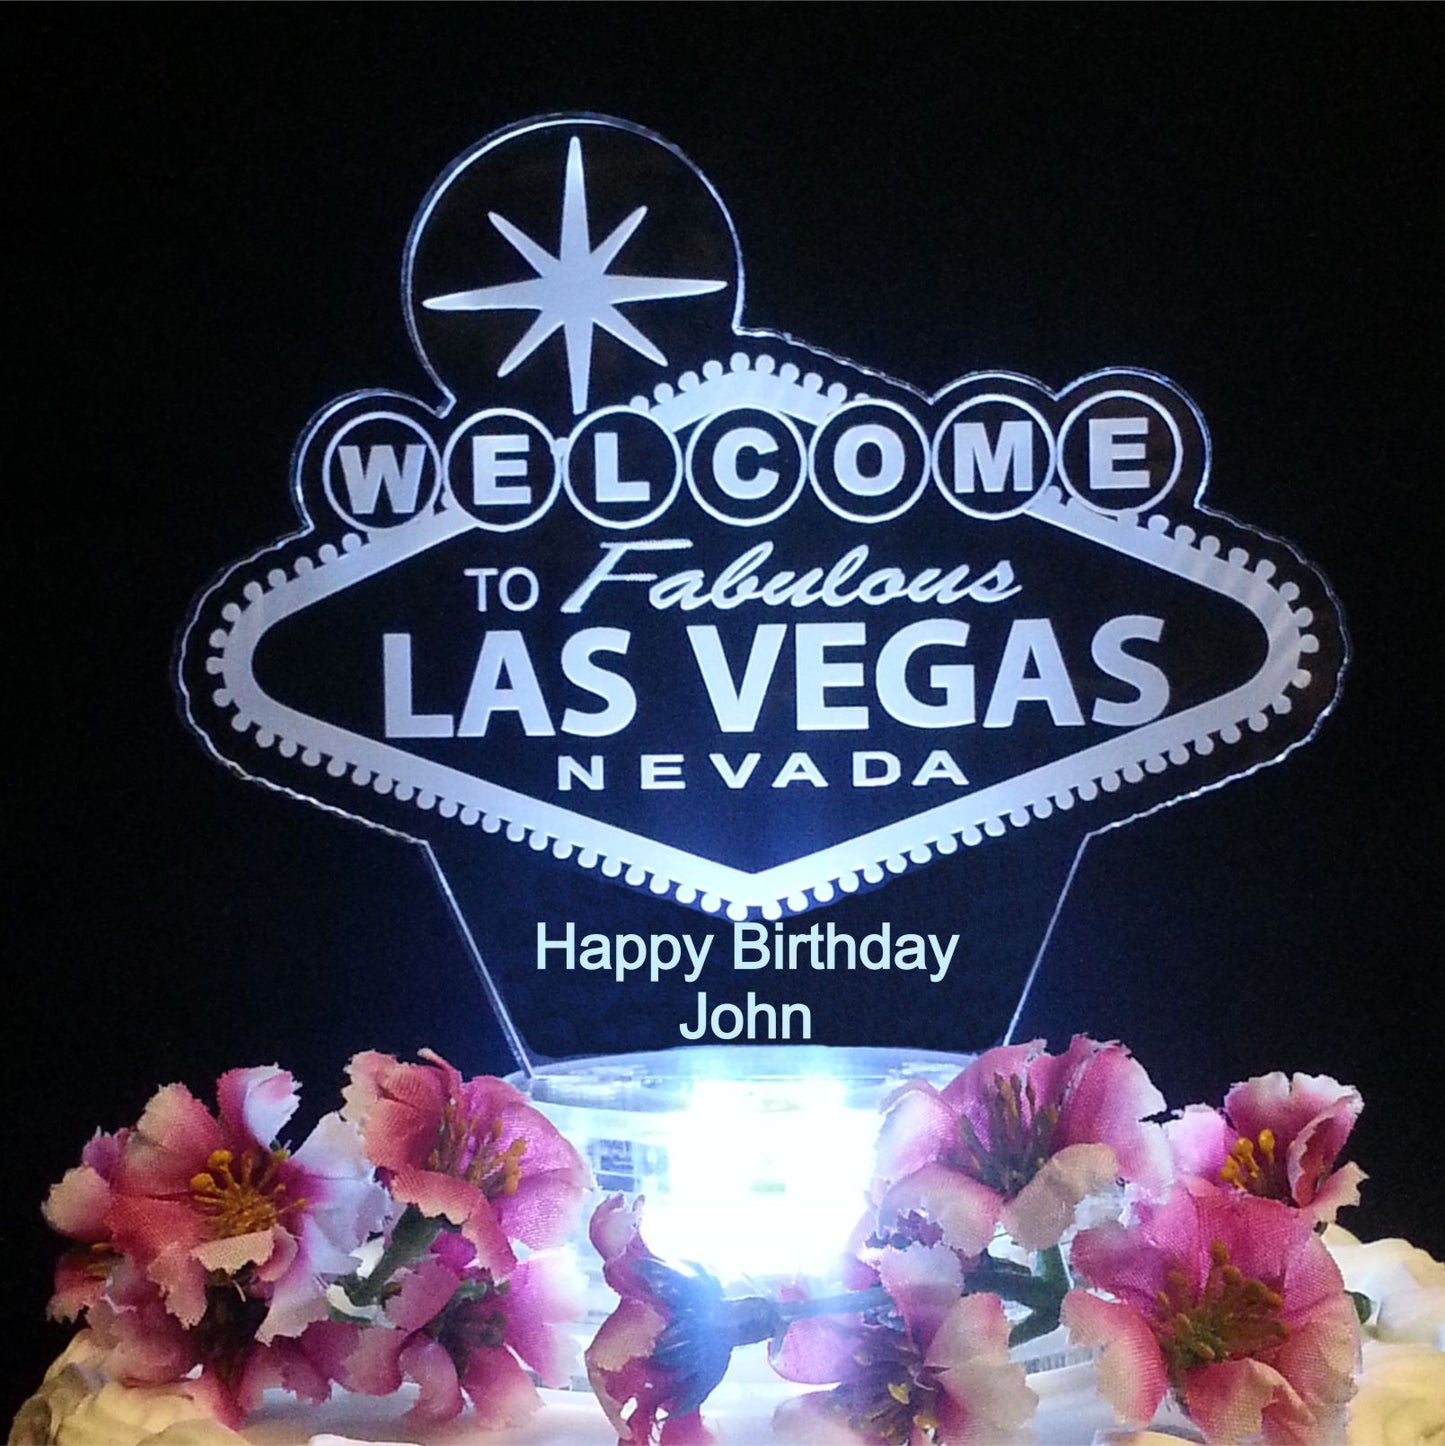 Las Vegas Welcome Sign - Acrylic Key Chain